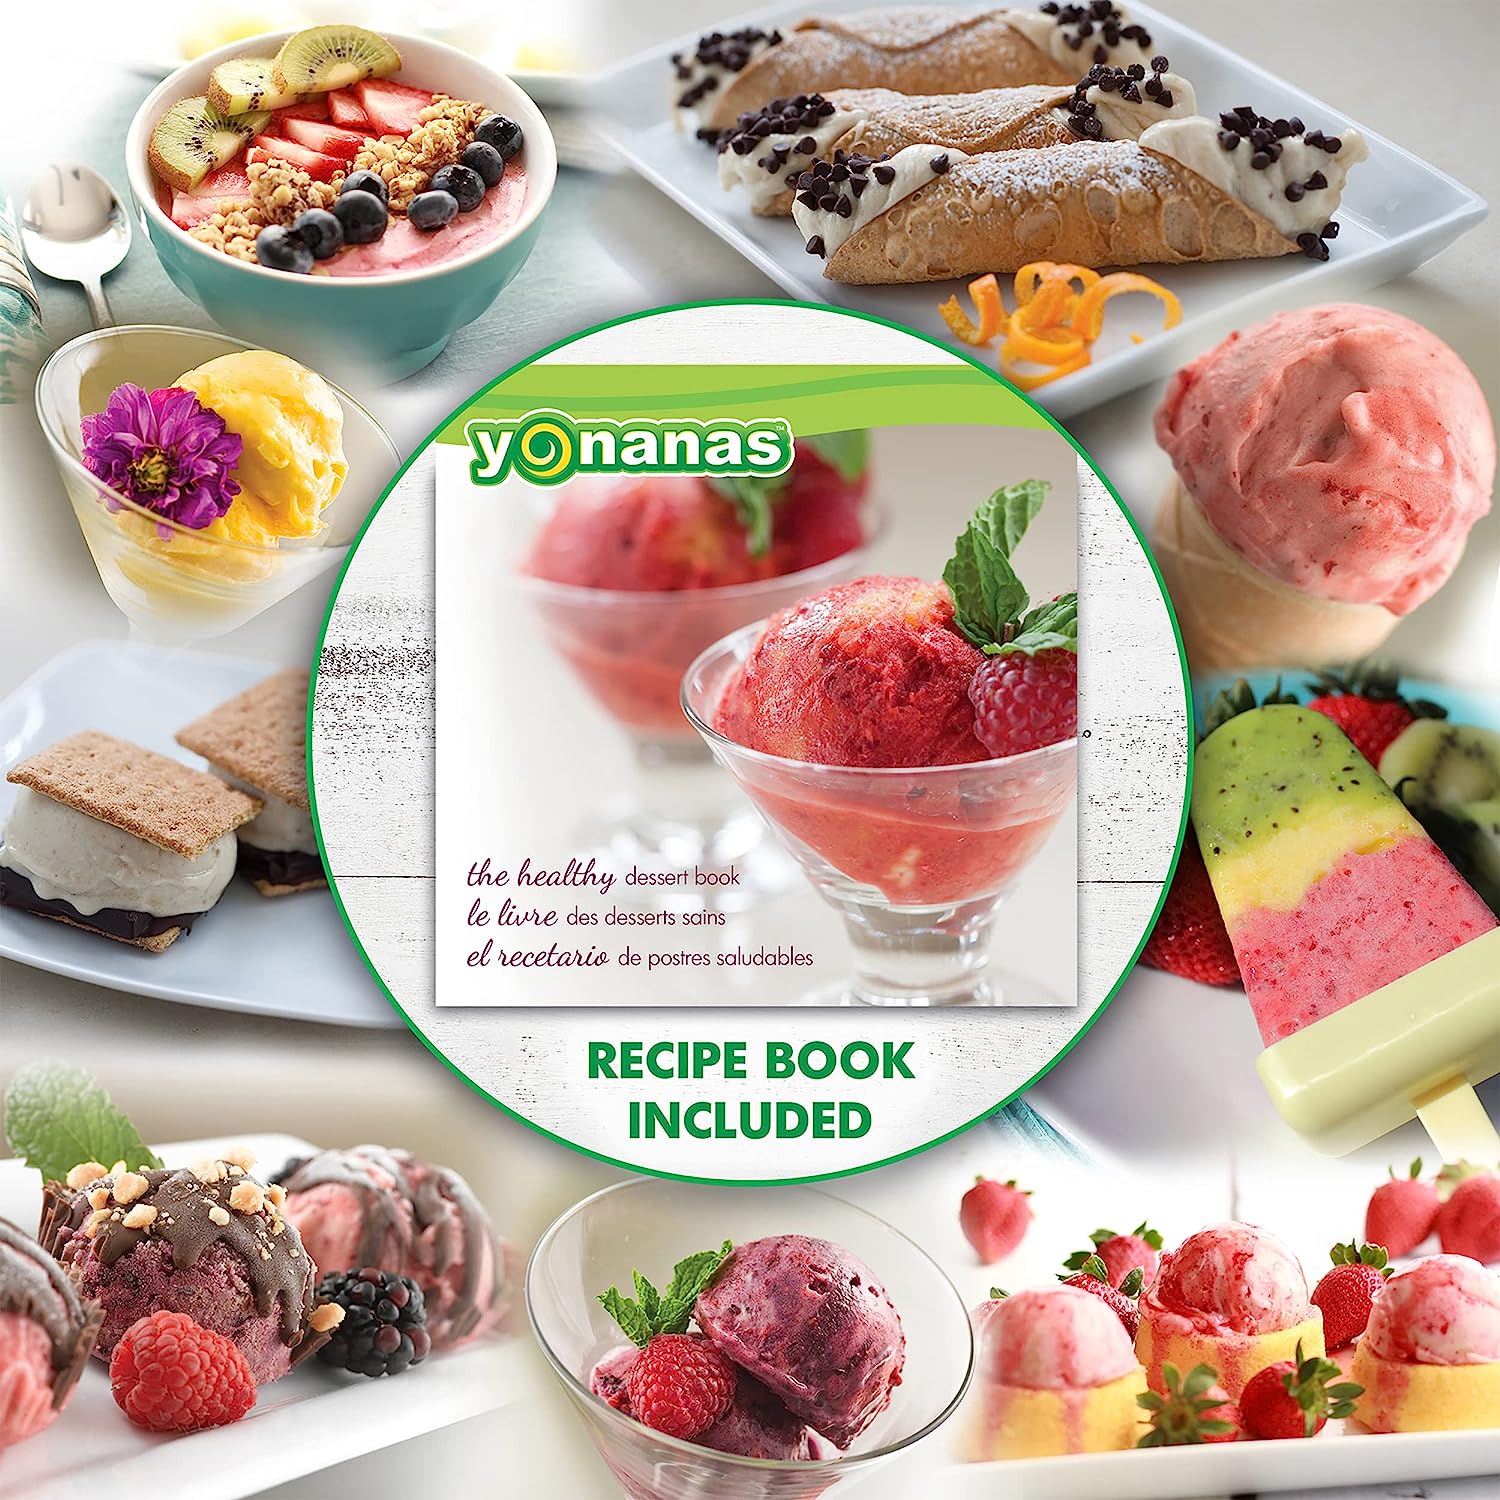  Yonanas 902 Classic Vegan, Dairy-Free Frozen Fruit